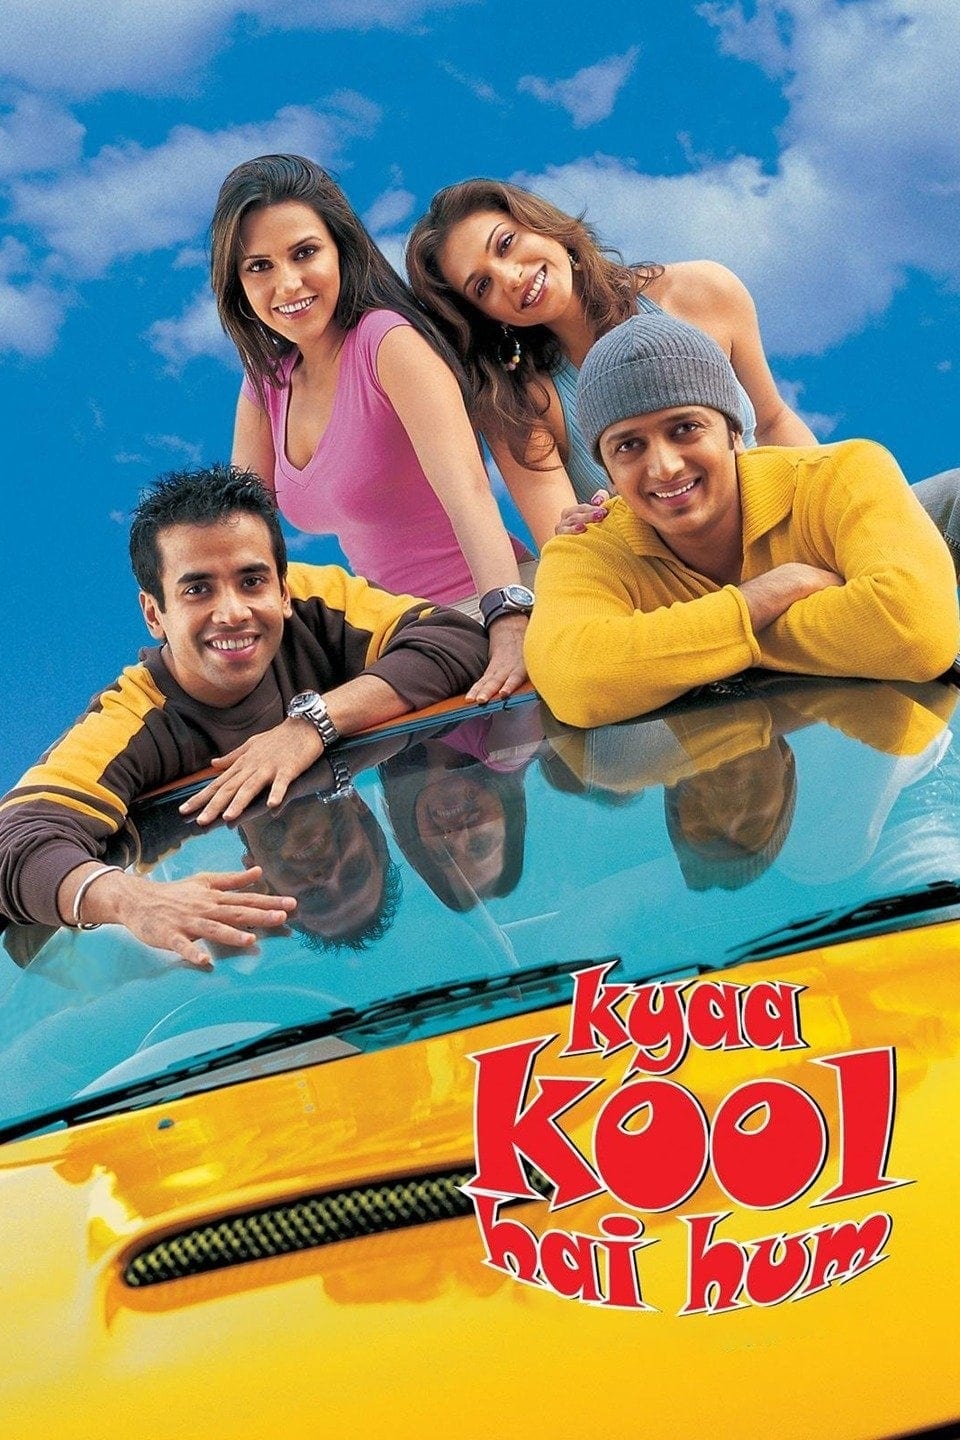 Poster for the movie "Kyaa Kool Hai Hum"